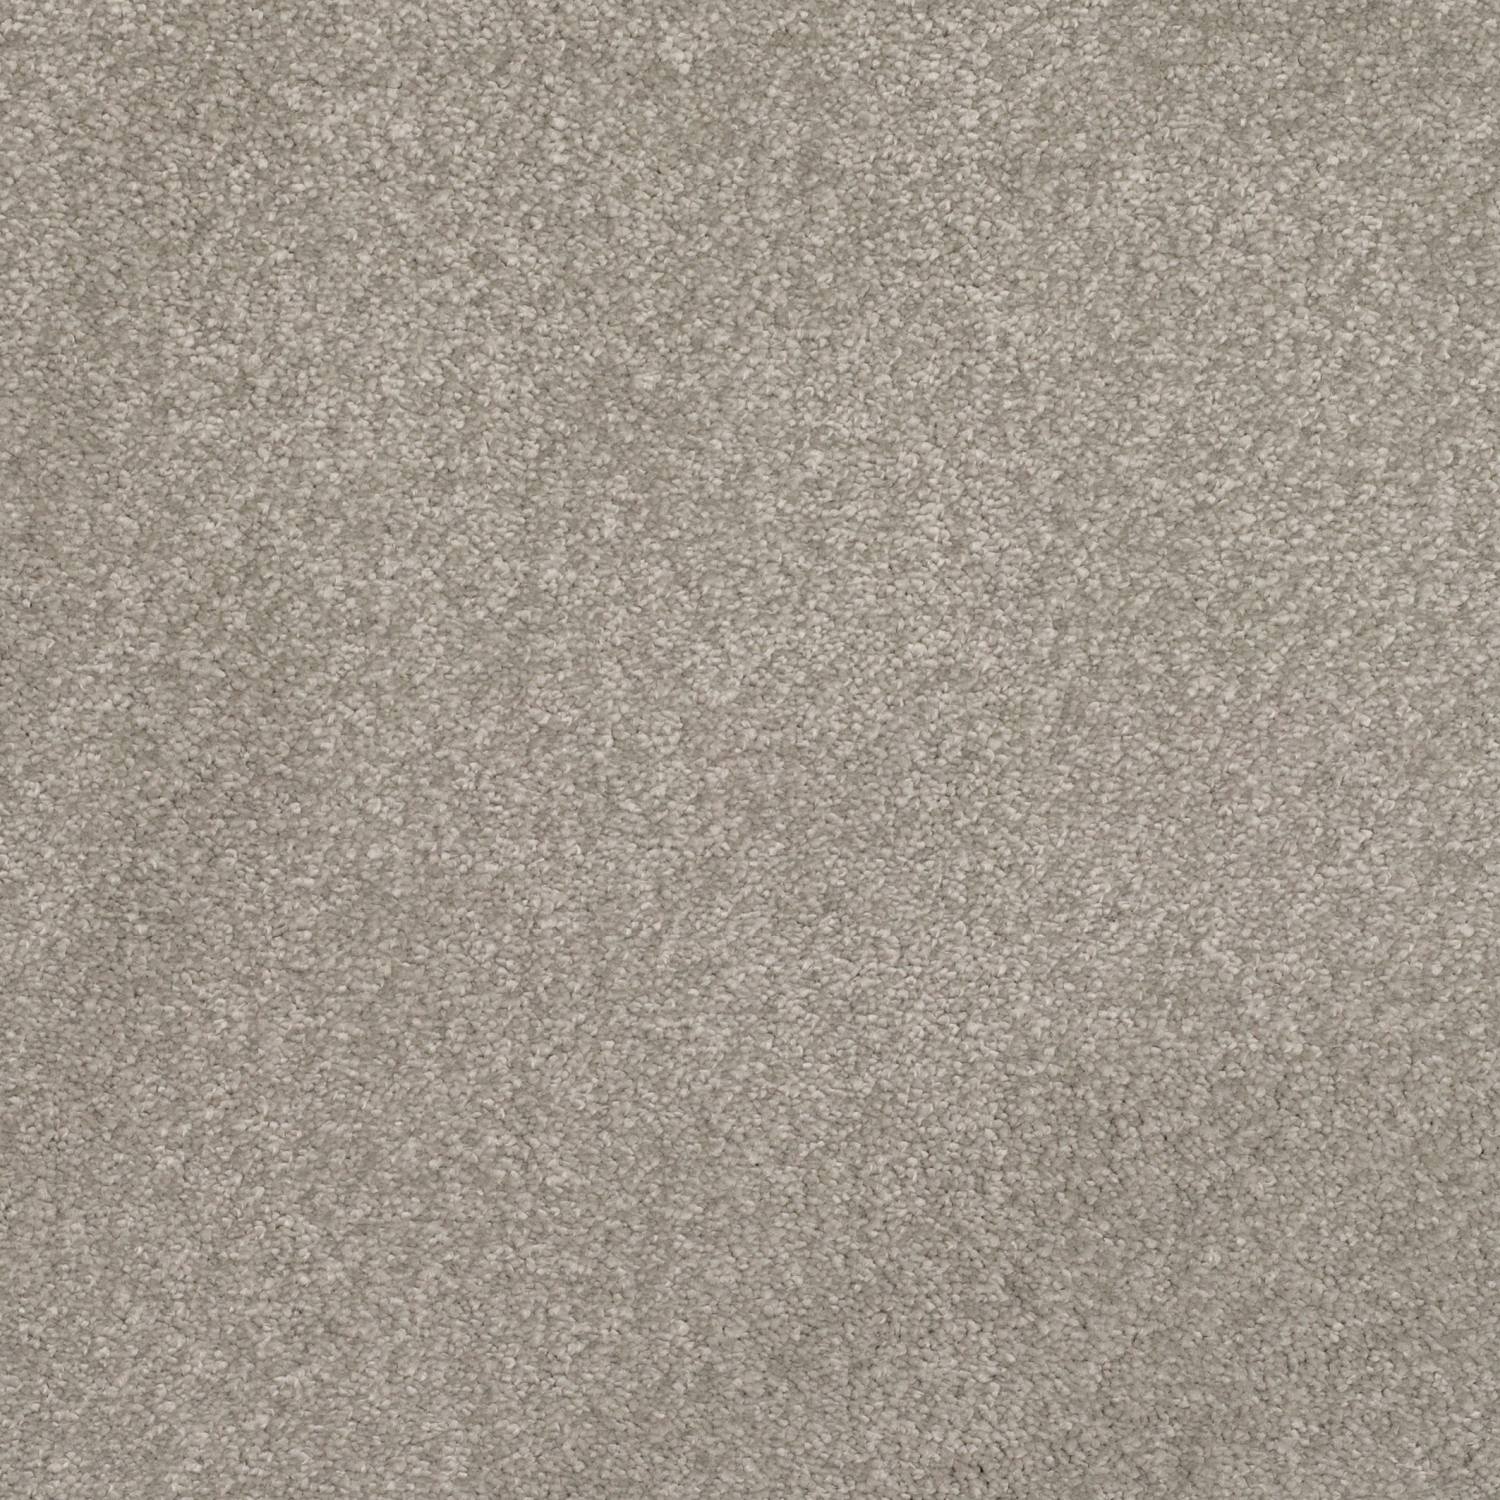 Obsession Twist Luxury Deep Pile Carpet - 134 Chalk White